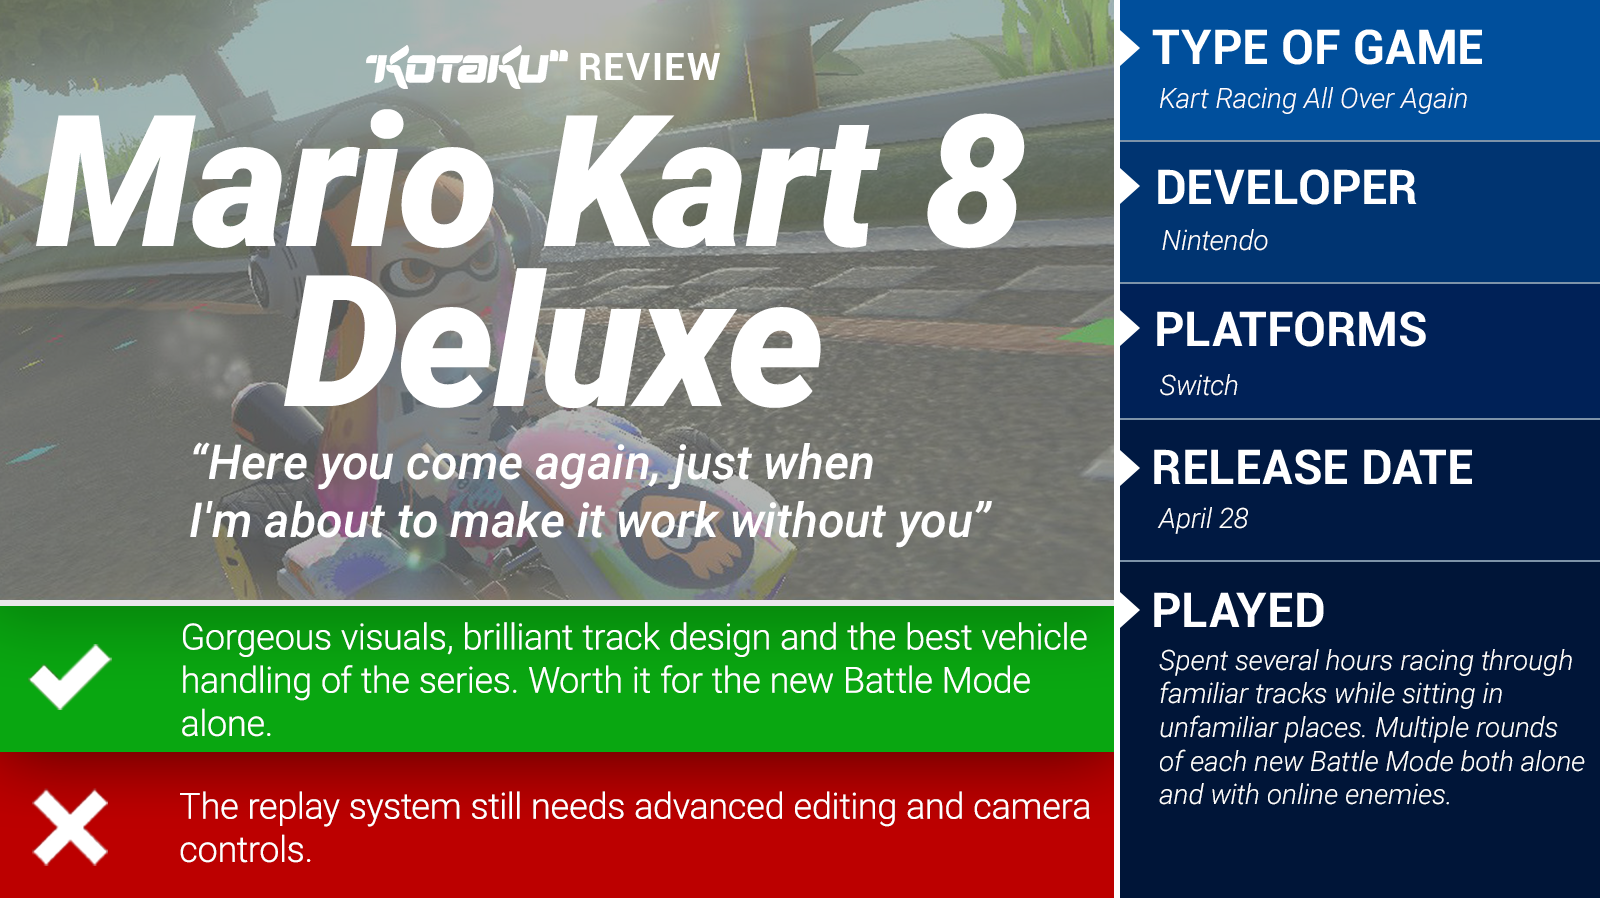 Mario Kart 8 Deluxe: The Kotaku Review